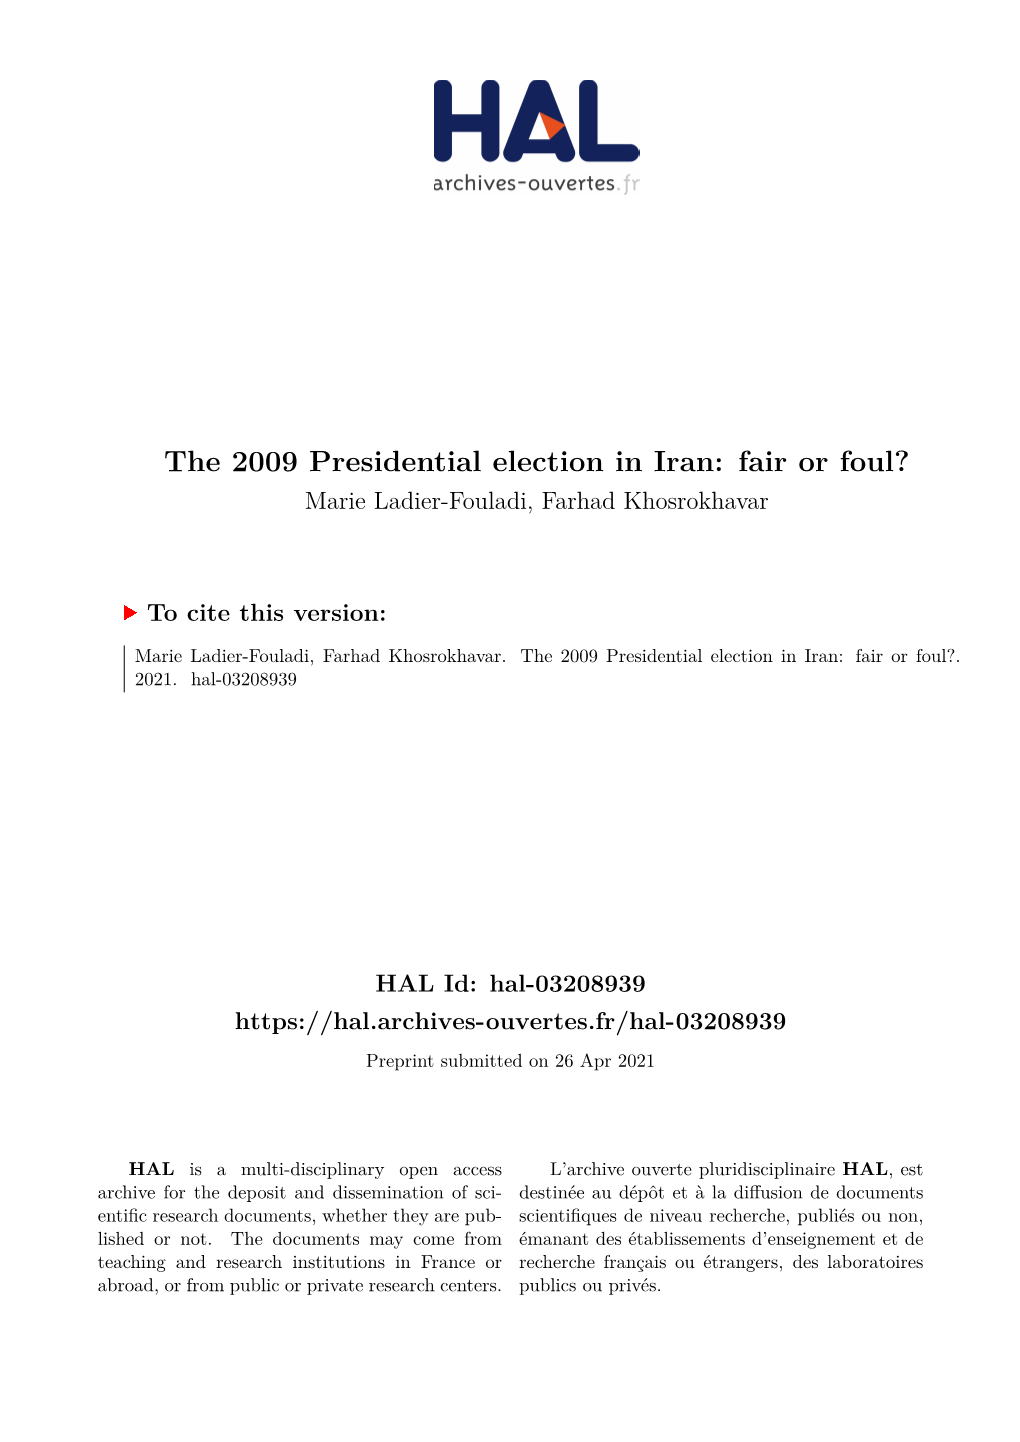 The 2009 Presidential Election in Iran: Fair Or Foul? Marie Ladier-Fouladi, Farhad Khosrokhavar